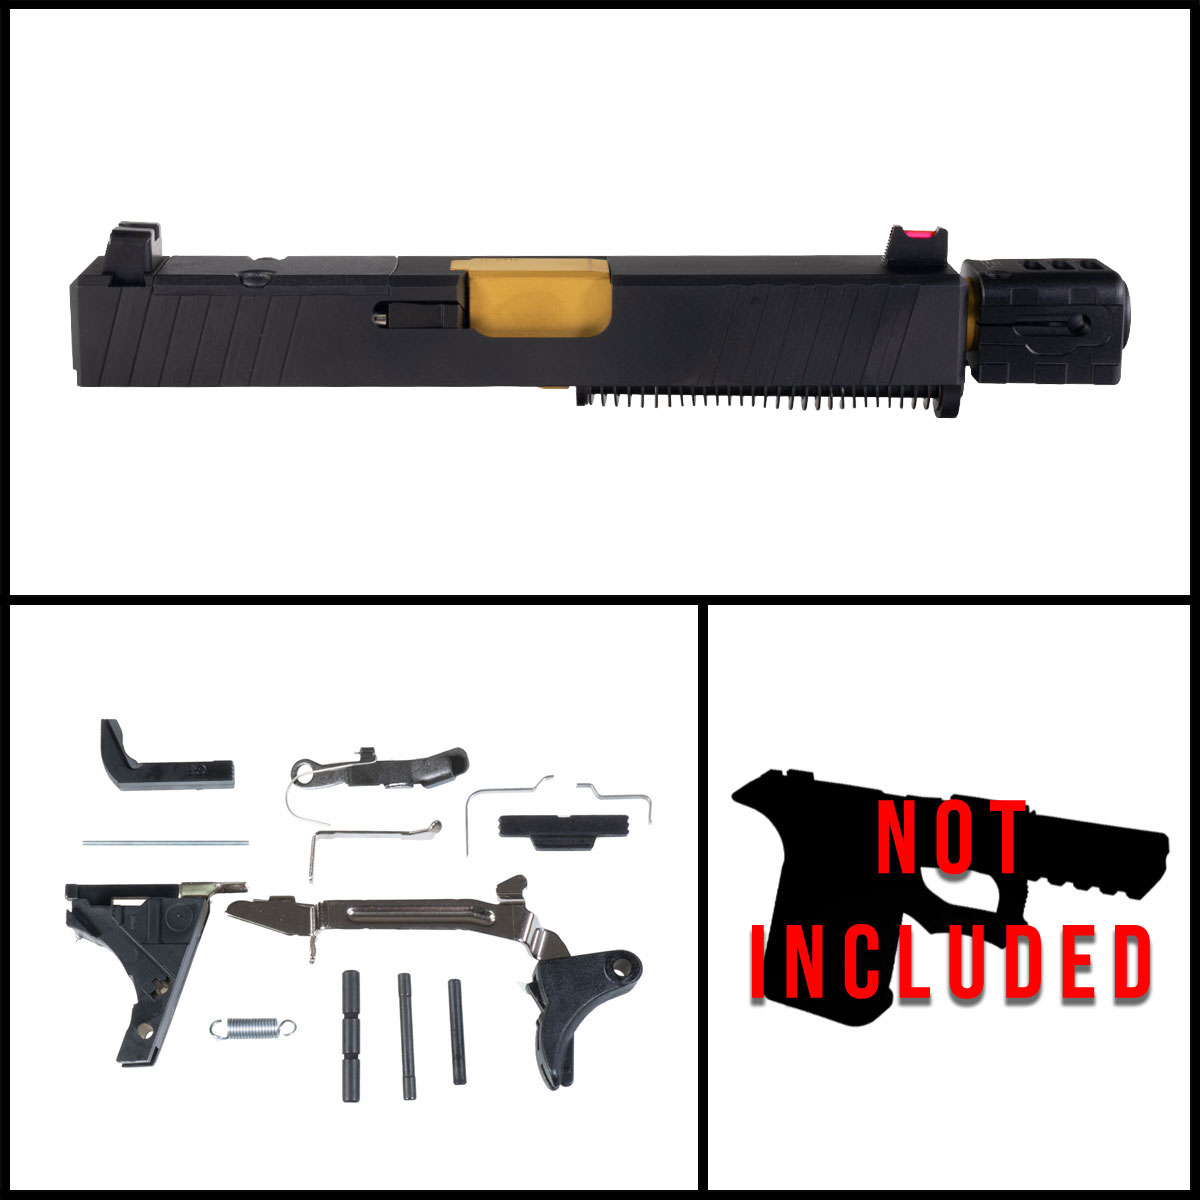 MMC 'Pum w/ Sylvan Arms Compensator' 9mm Full Pistol Build Kit (Everything Minus Frame) - Glock 19 Gen 1-3 Compatible